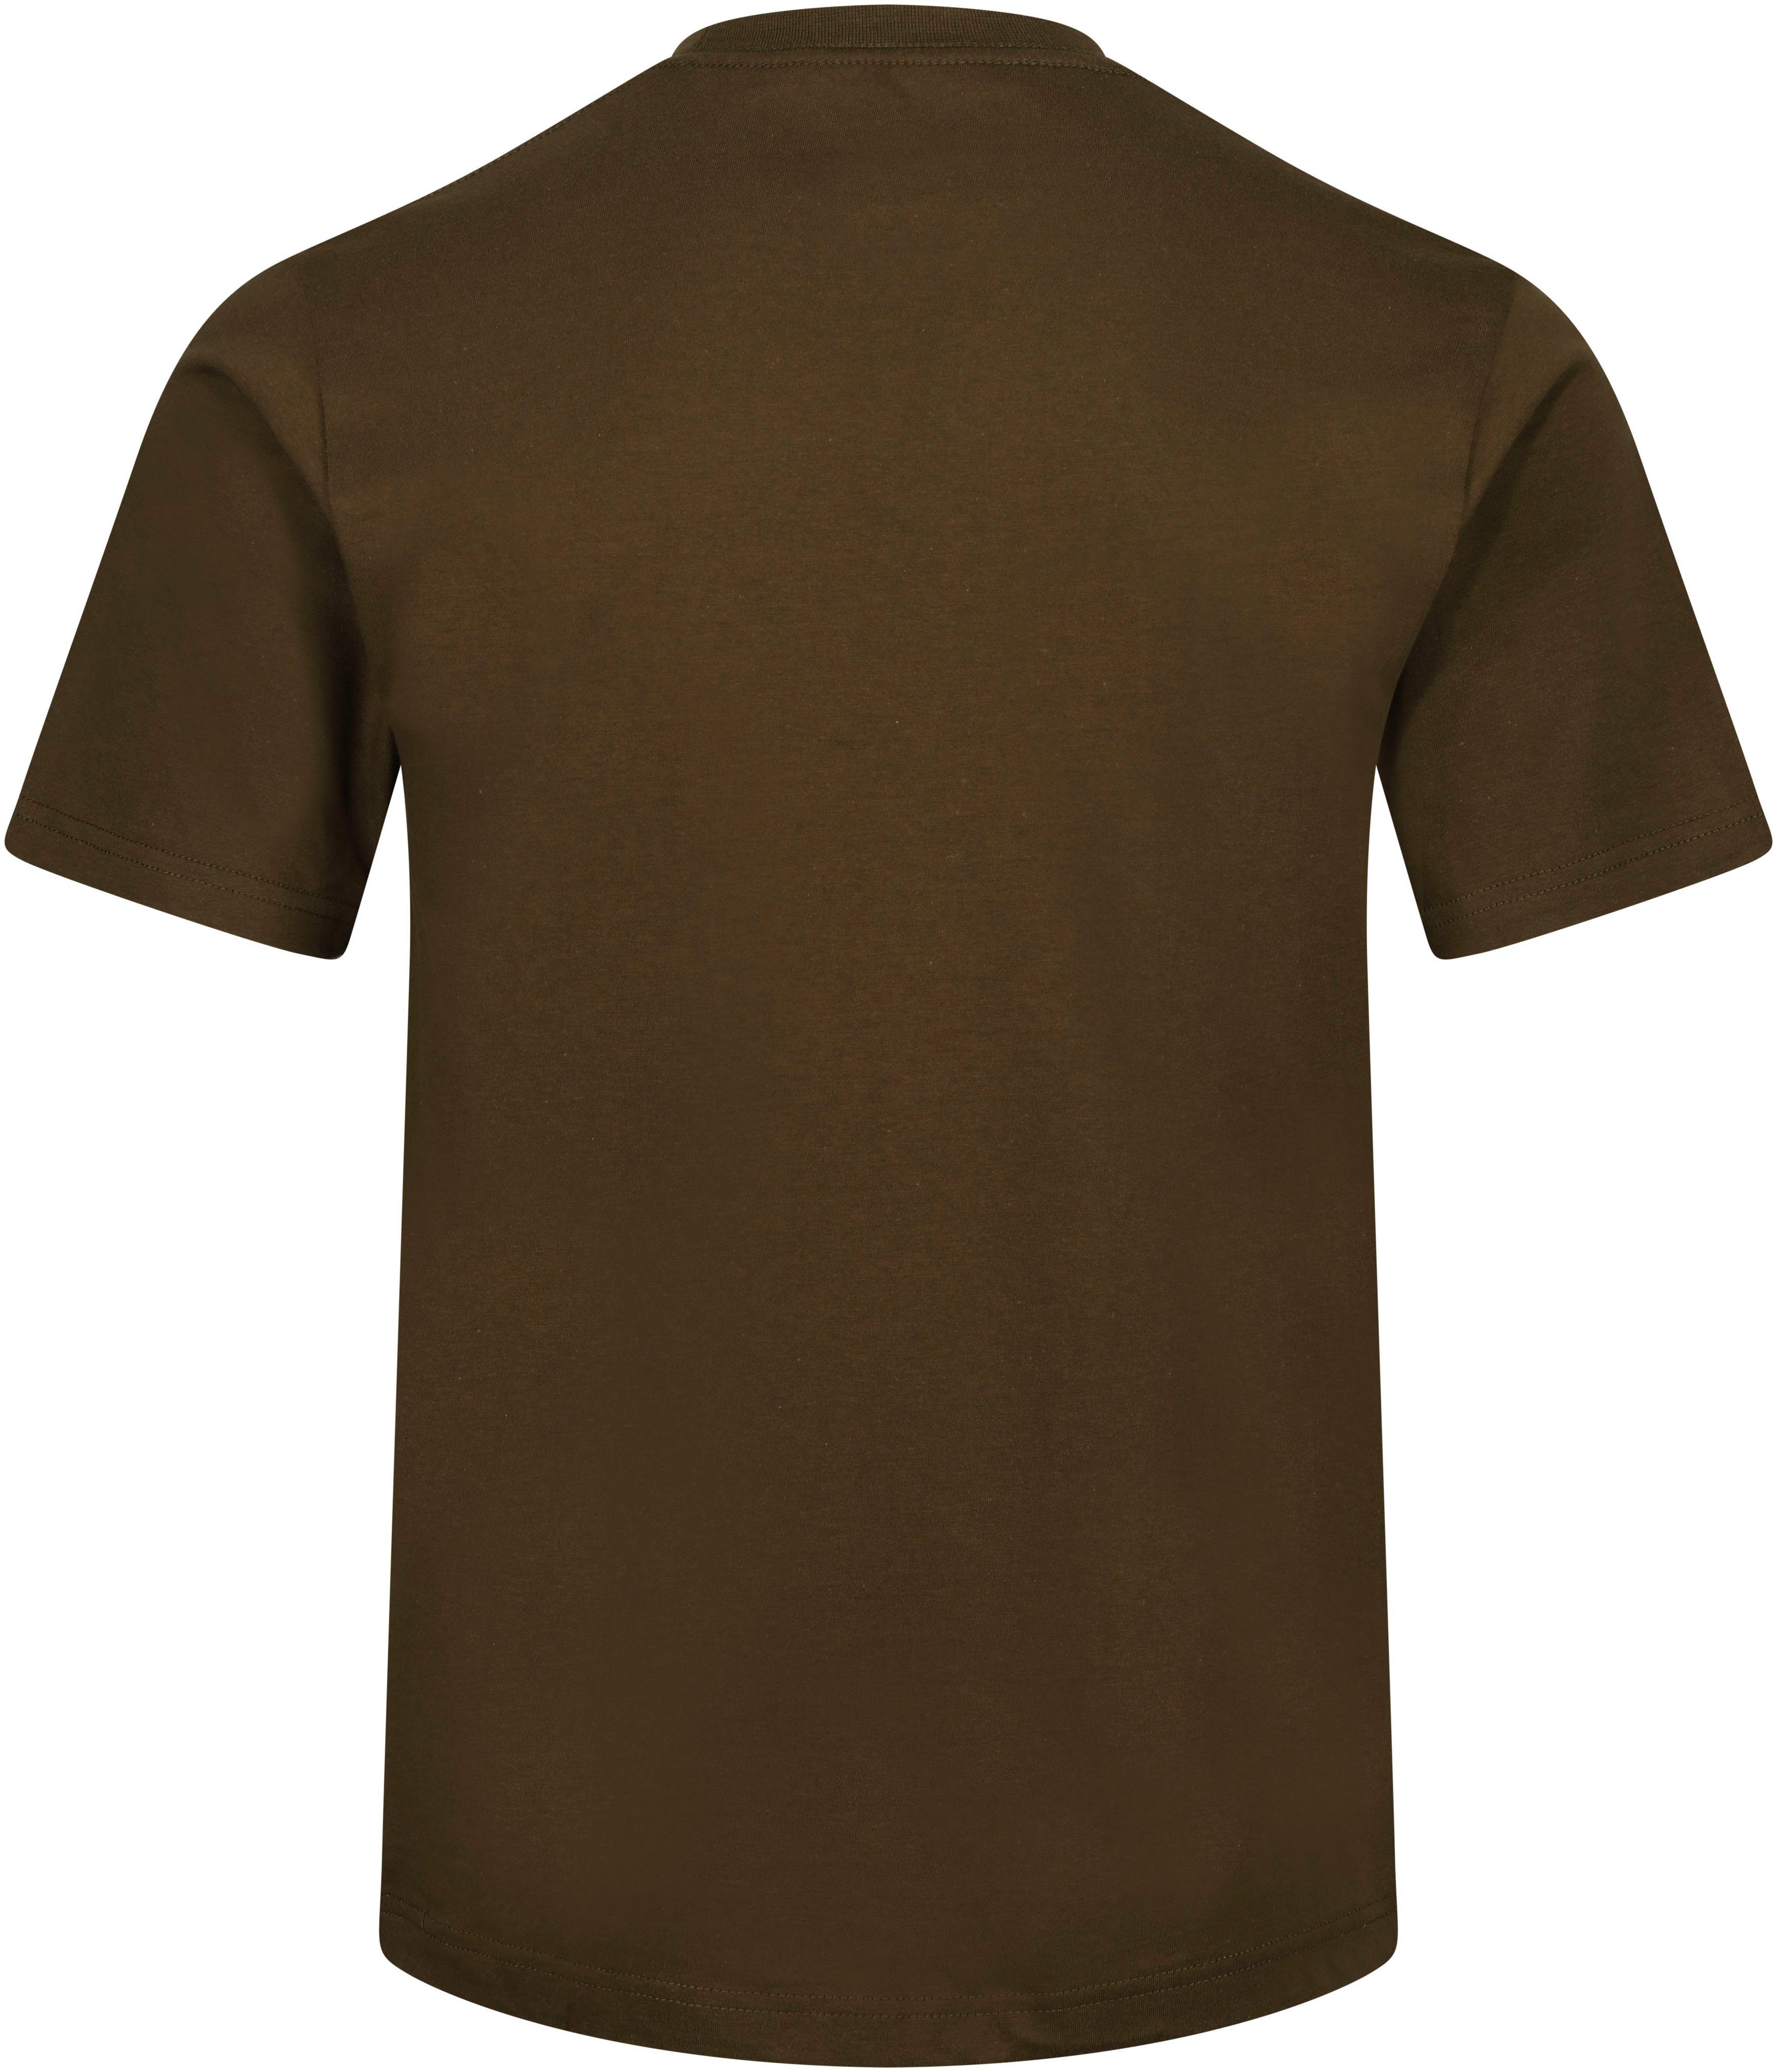 olive/charco DKNY GIANTS T-Shirt